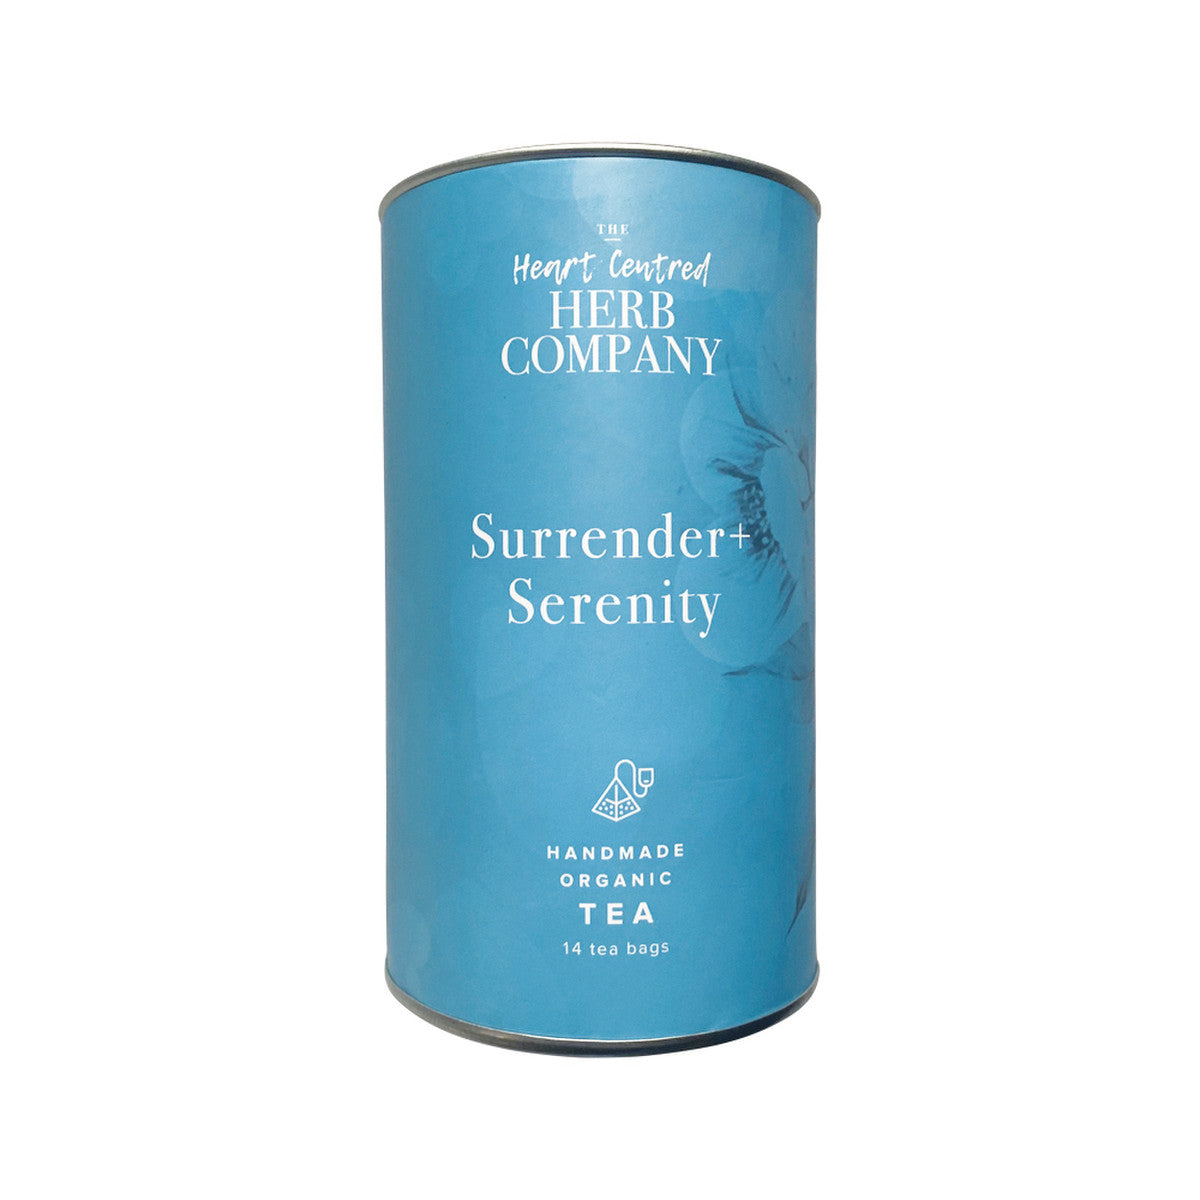 The Heart Centred Herb Company Surrender + Serenity, 14 Tea Bags Handmade Tea